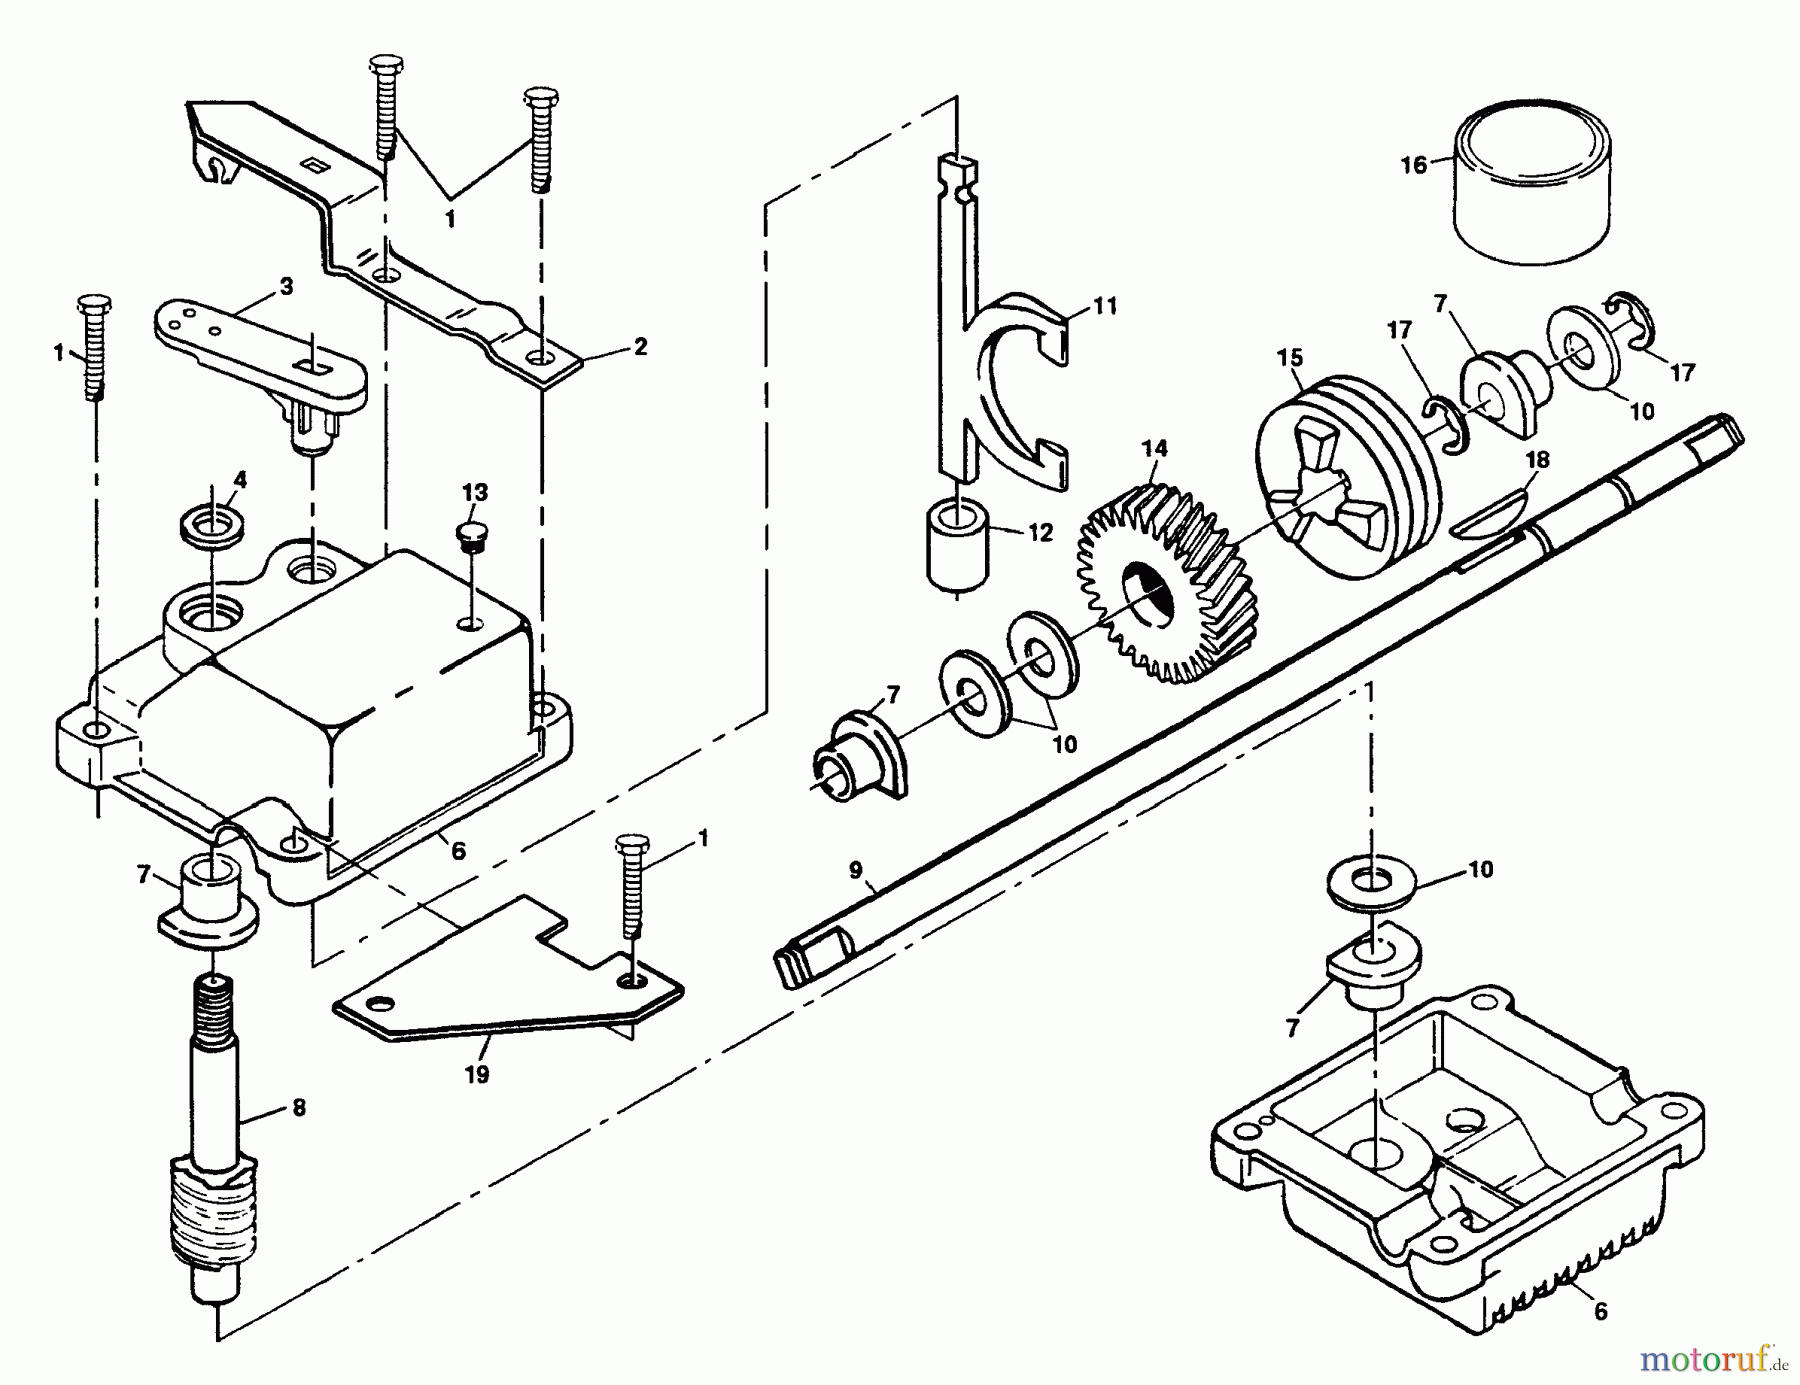  Husqvarna Rasenmäher H56 DHSB (954072301) - Husqvarna Walk-Behind Mower (1995-03 & After) Gear Case Assembly